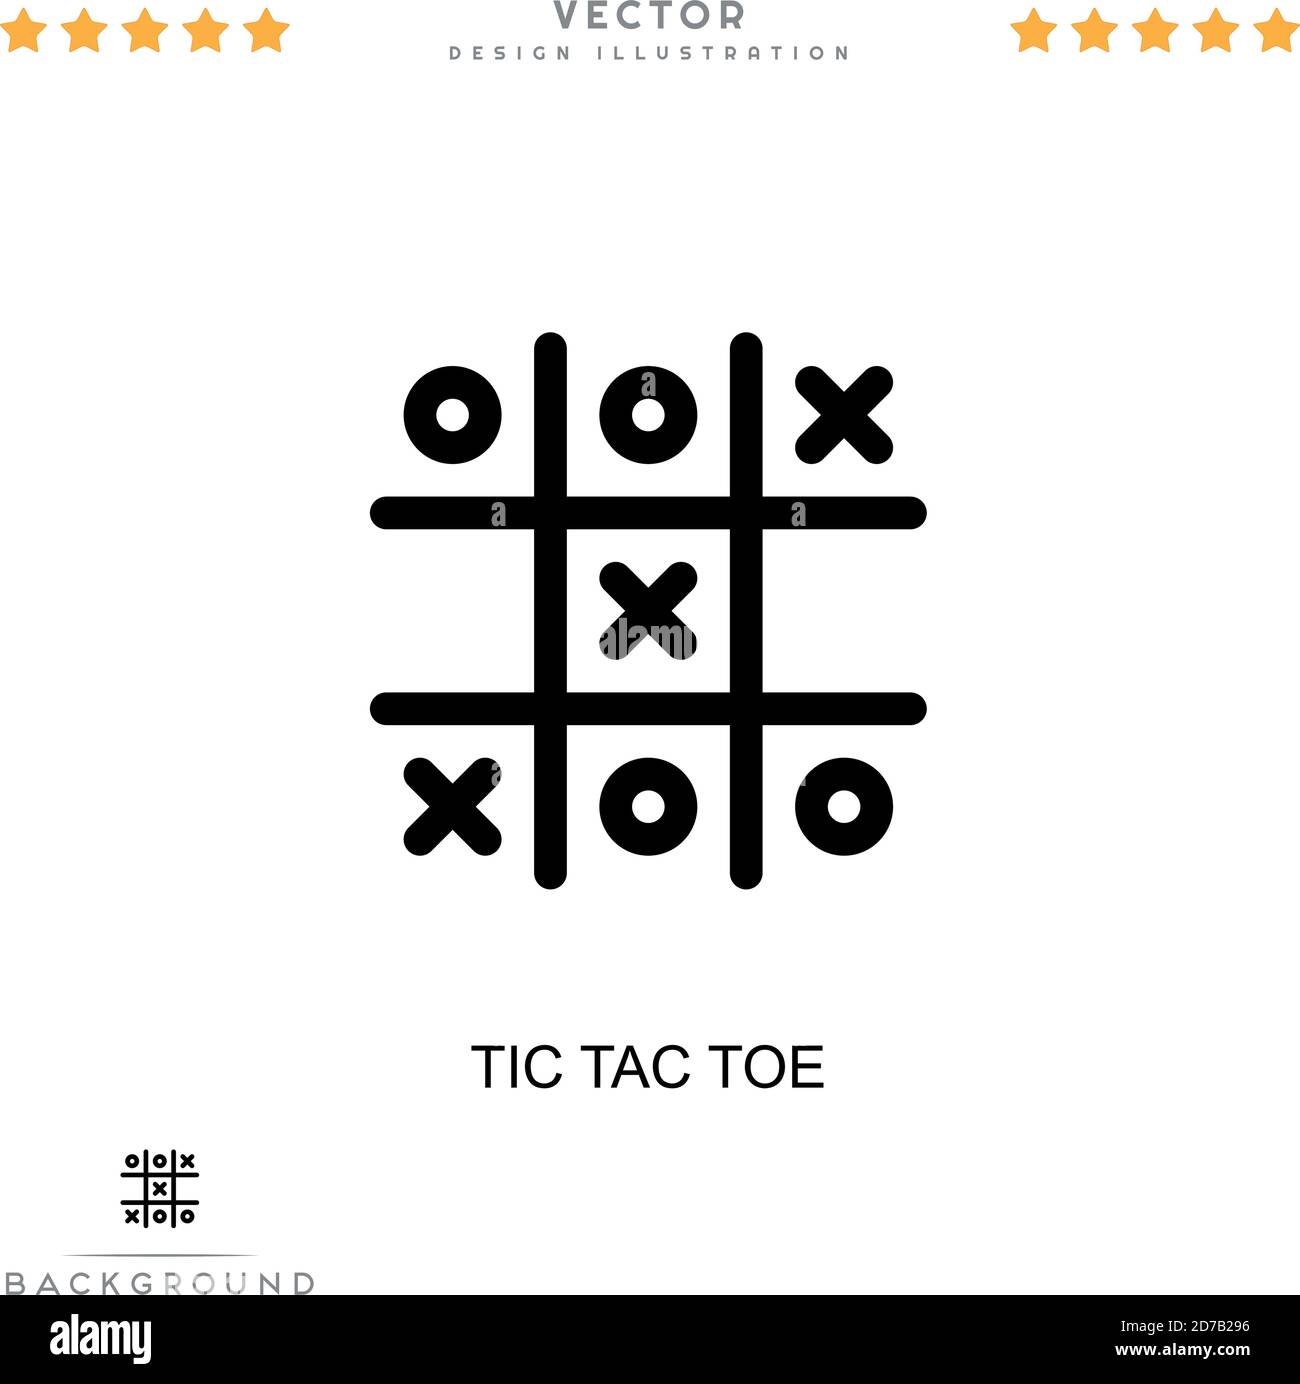 Create a Tic Tac Toe Mobile App Icon in Adobe Illustrator